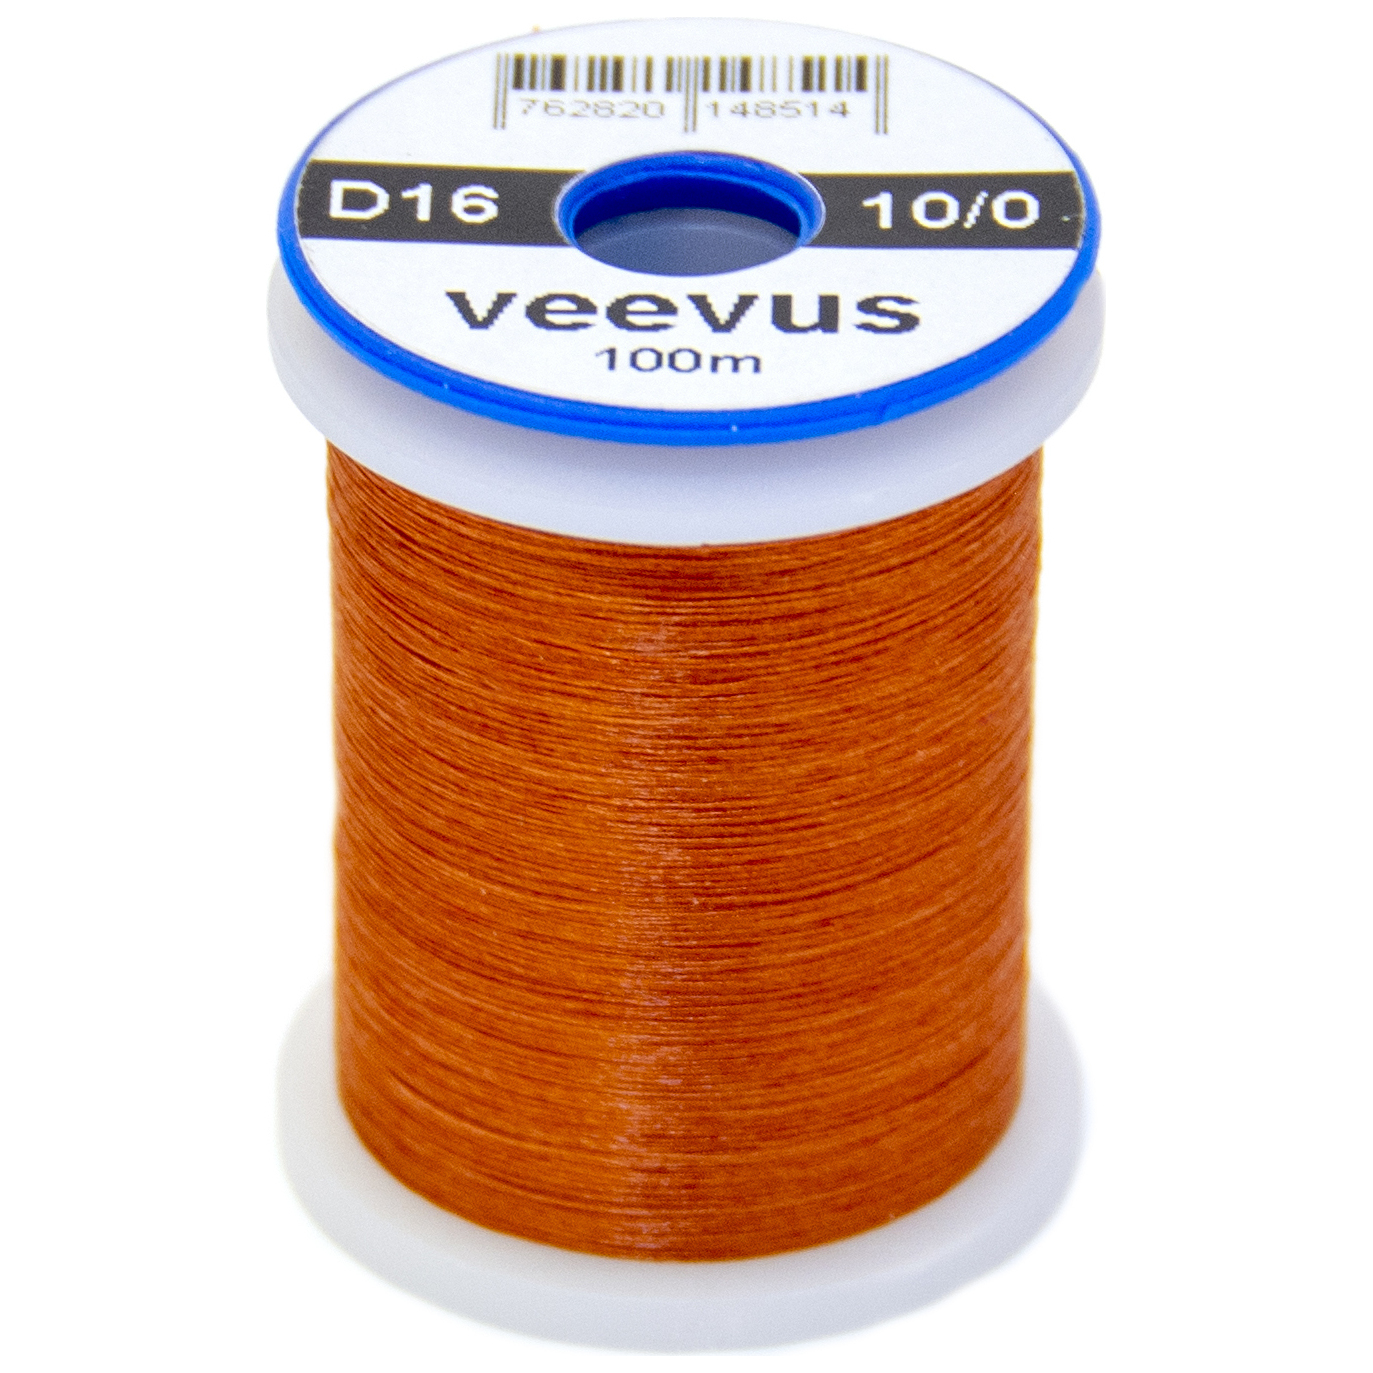 Veevus 10/0 Thread Brown